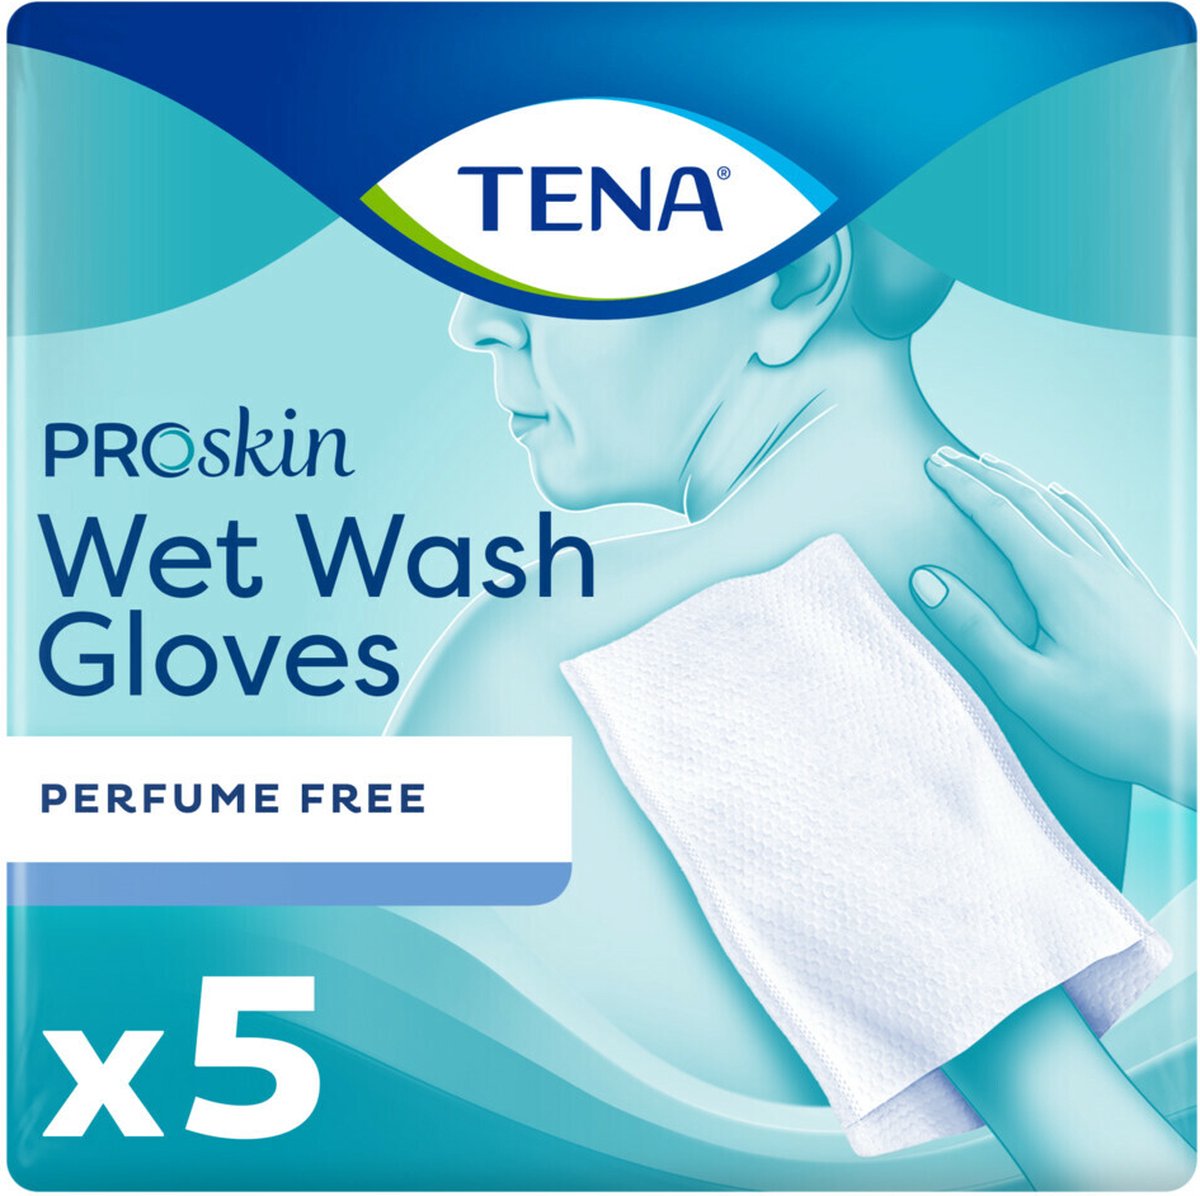 TENA ProSkin Wet Wash Gloves - Zonder parfum - 5 stuks - wegwerp